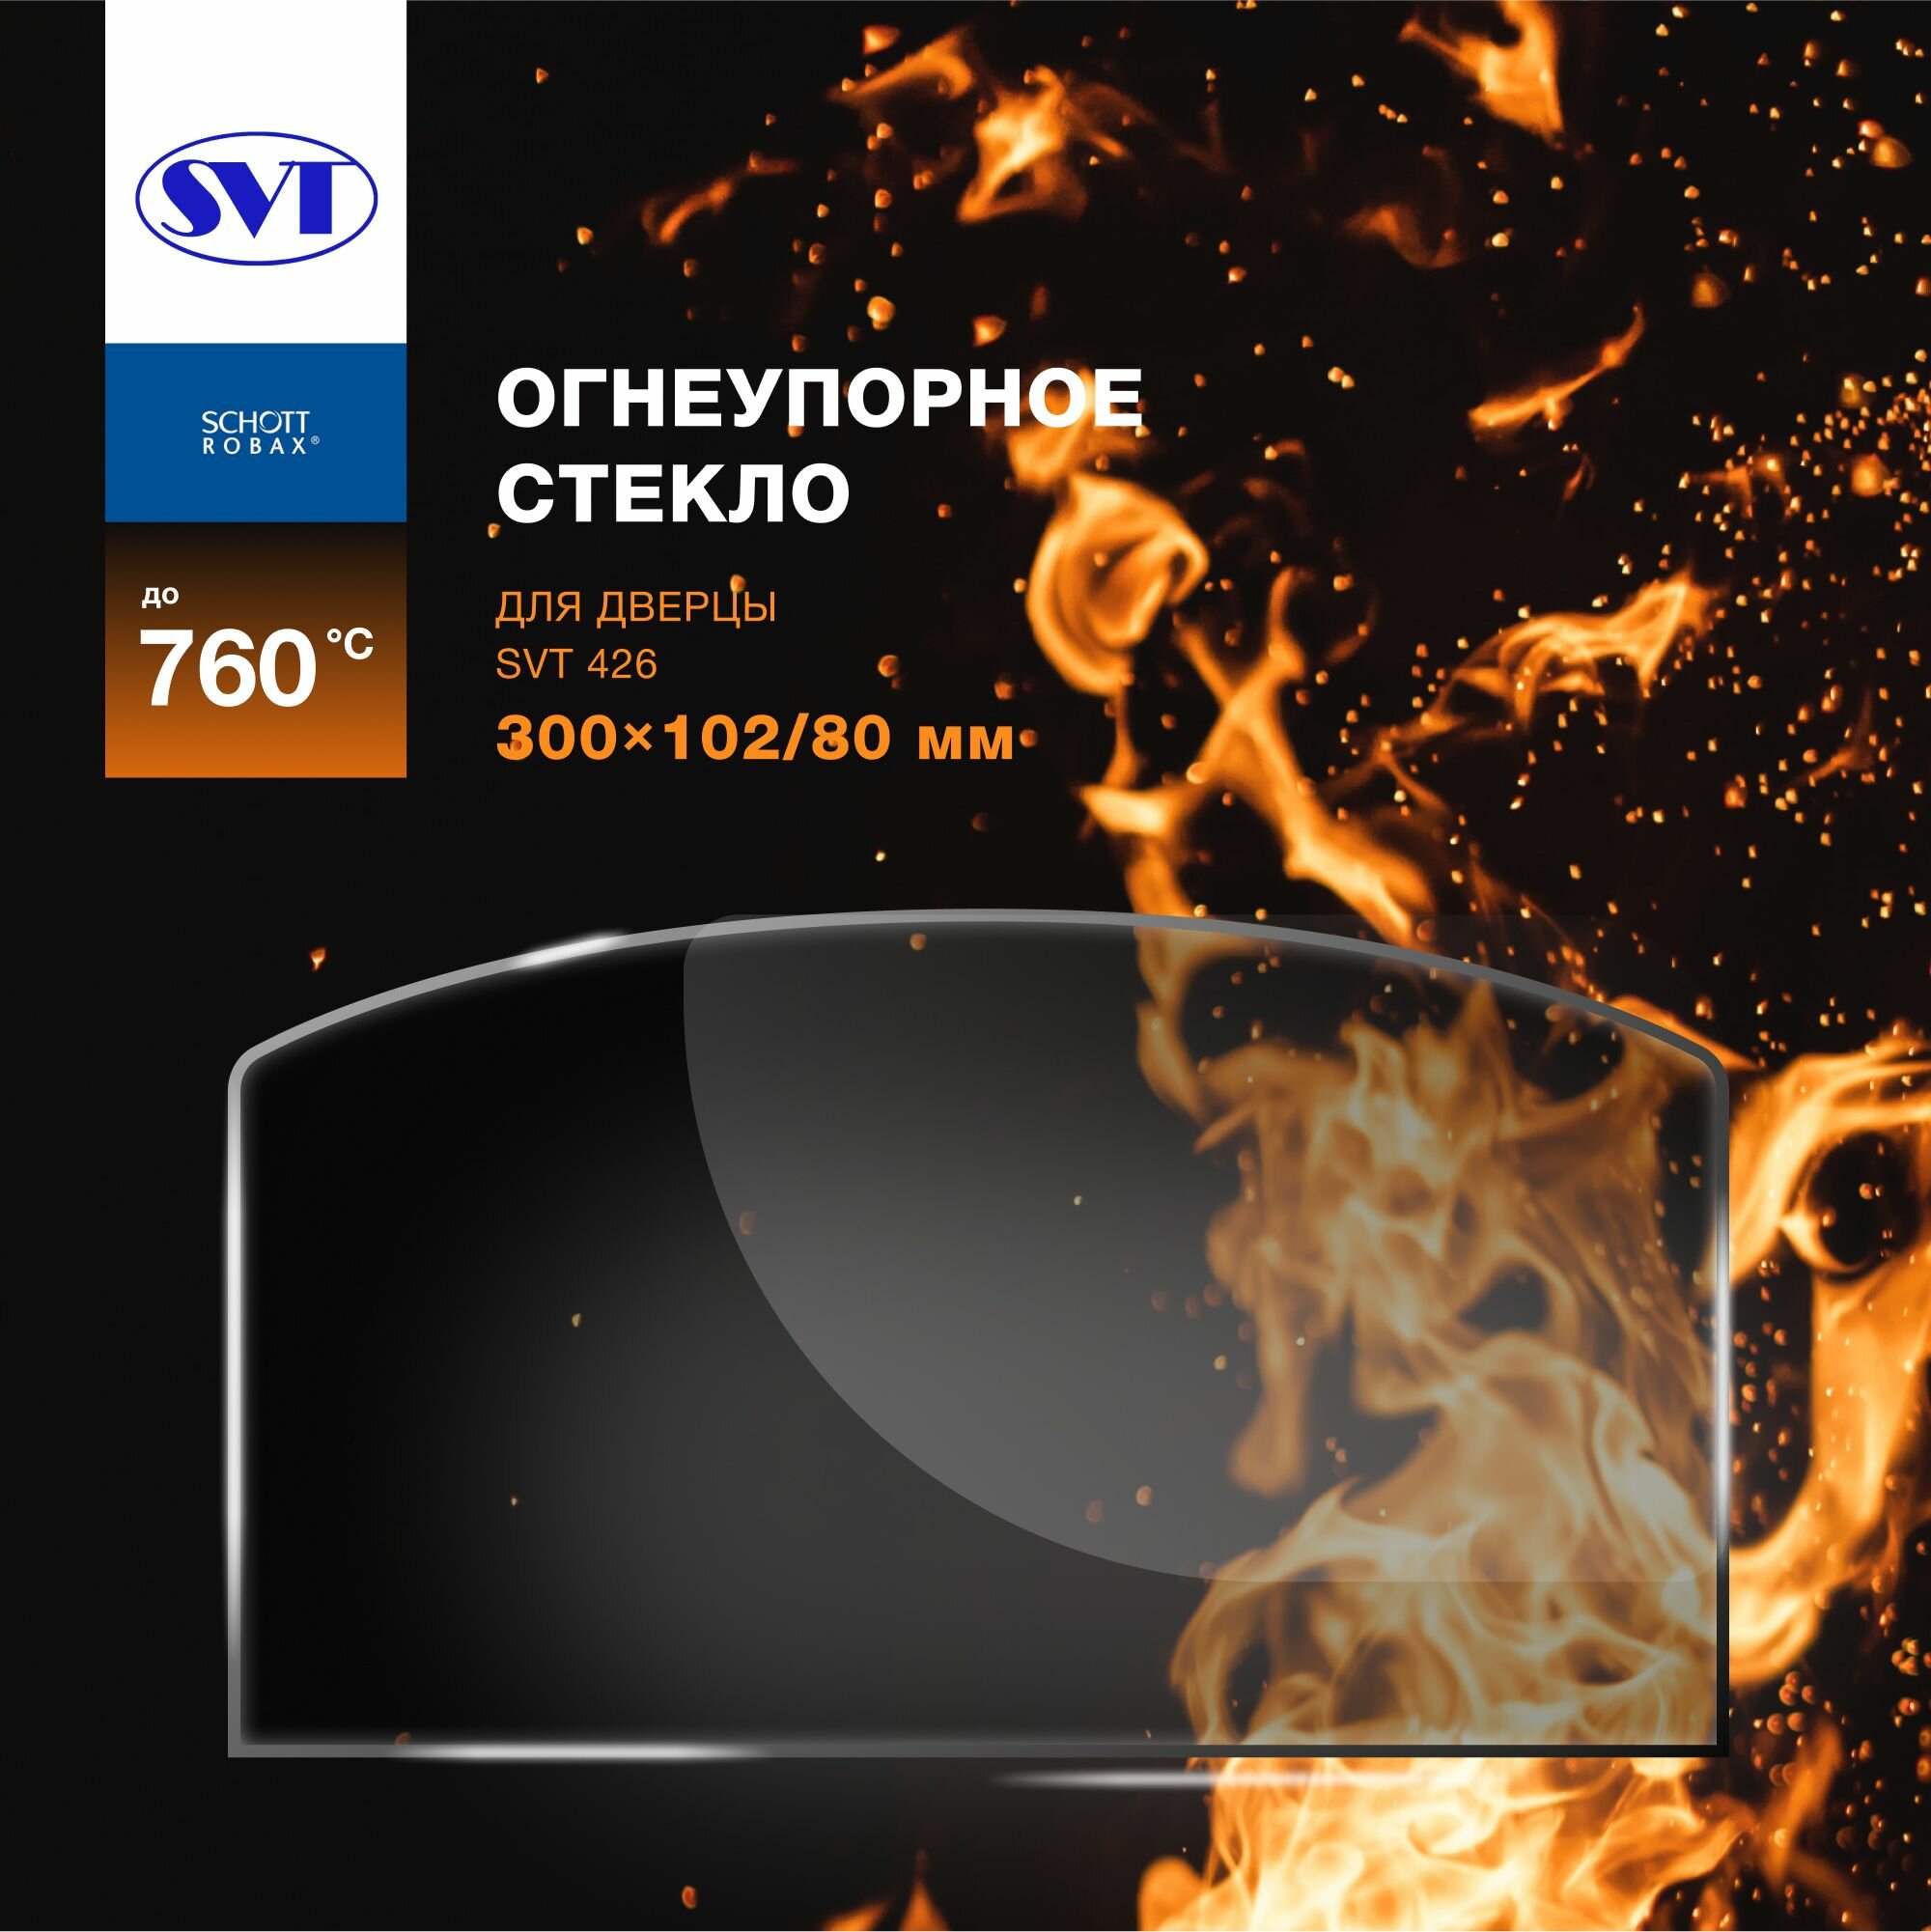 Огнеупорное жаропрочное стекло дверцы SVT 426, 300х102/80 мм